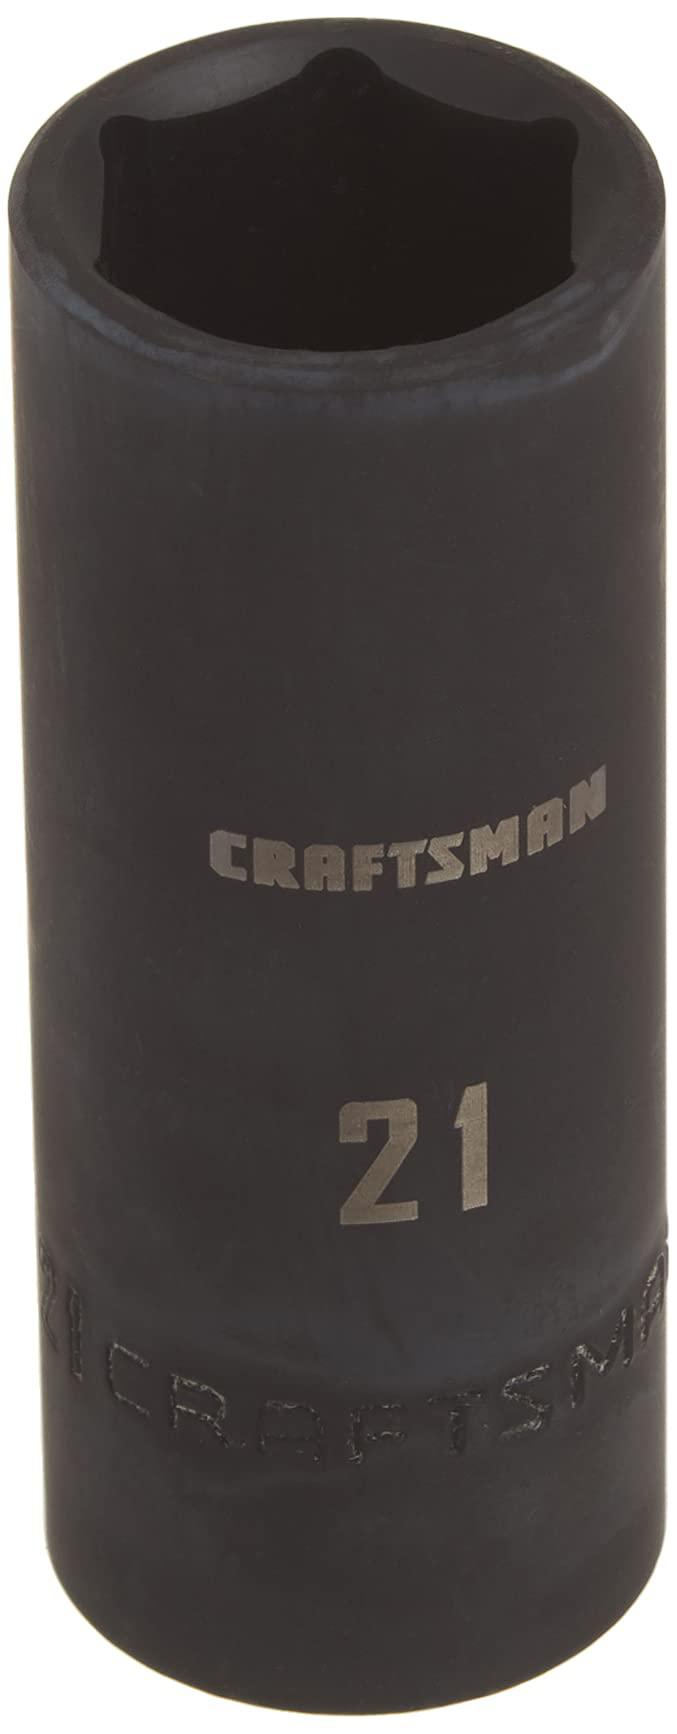 craftsman deep impact socket, metric, 1/2-inch drive, 21mm (cmmt16081)